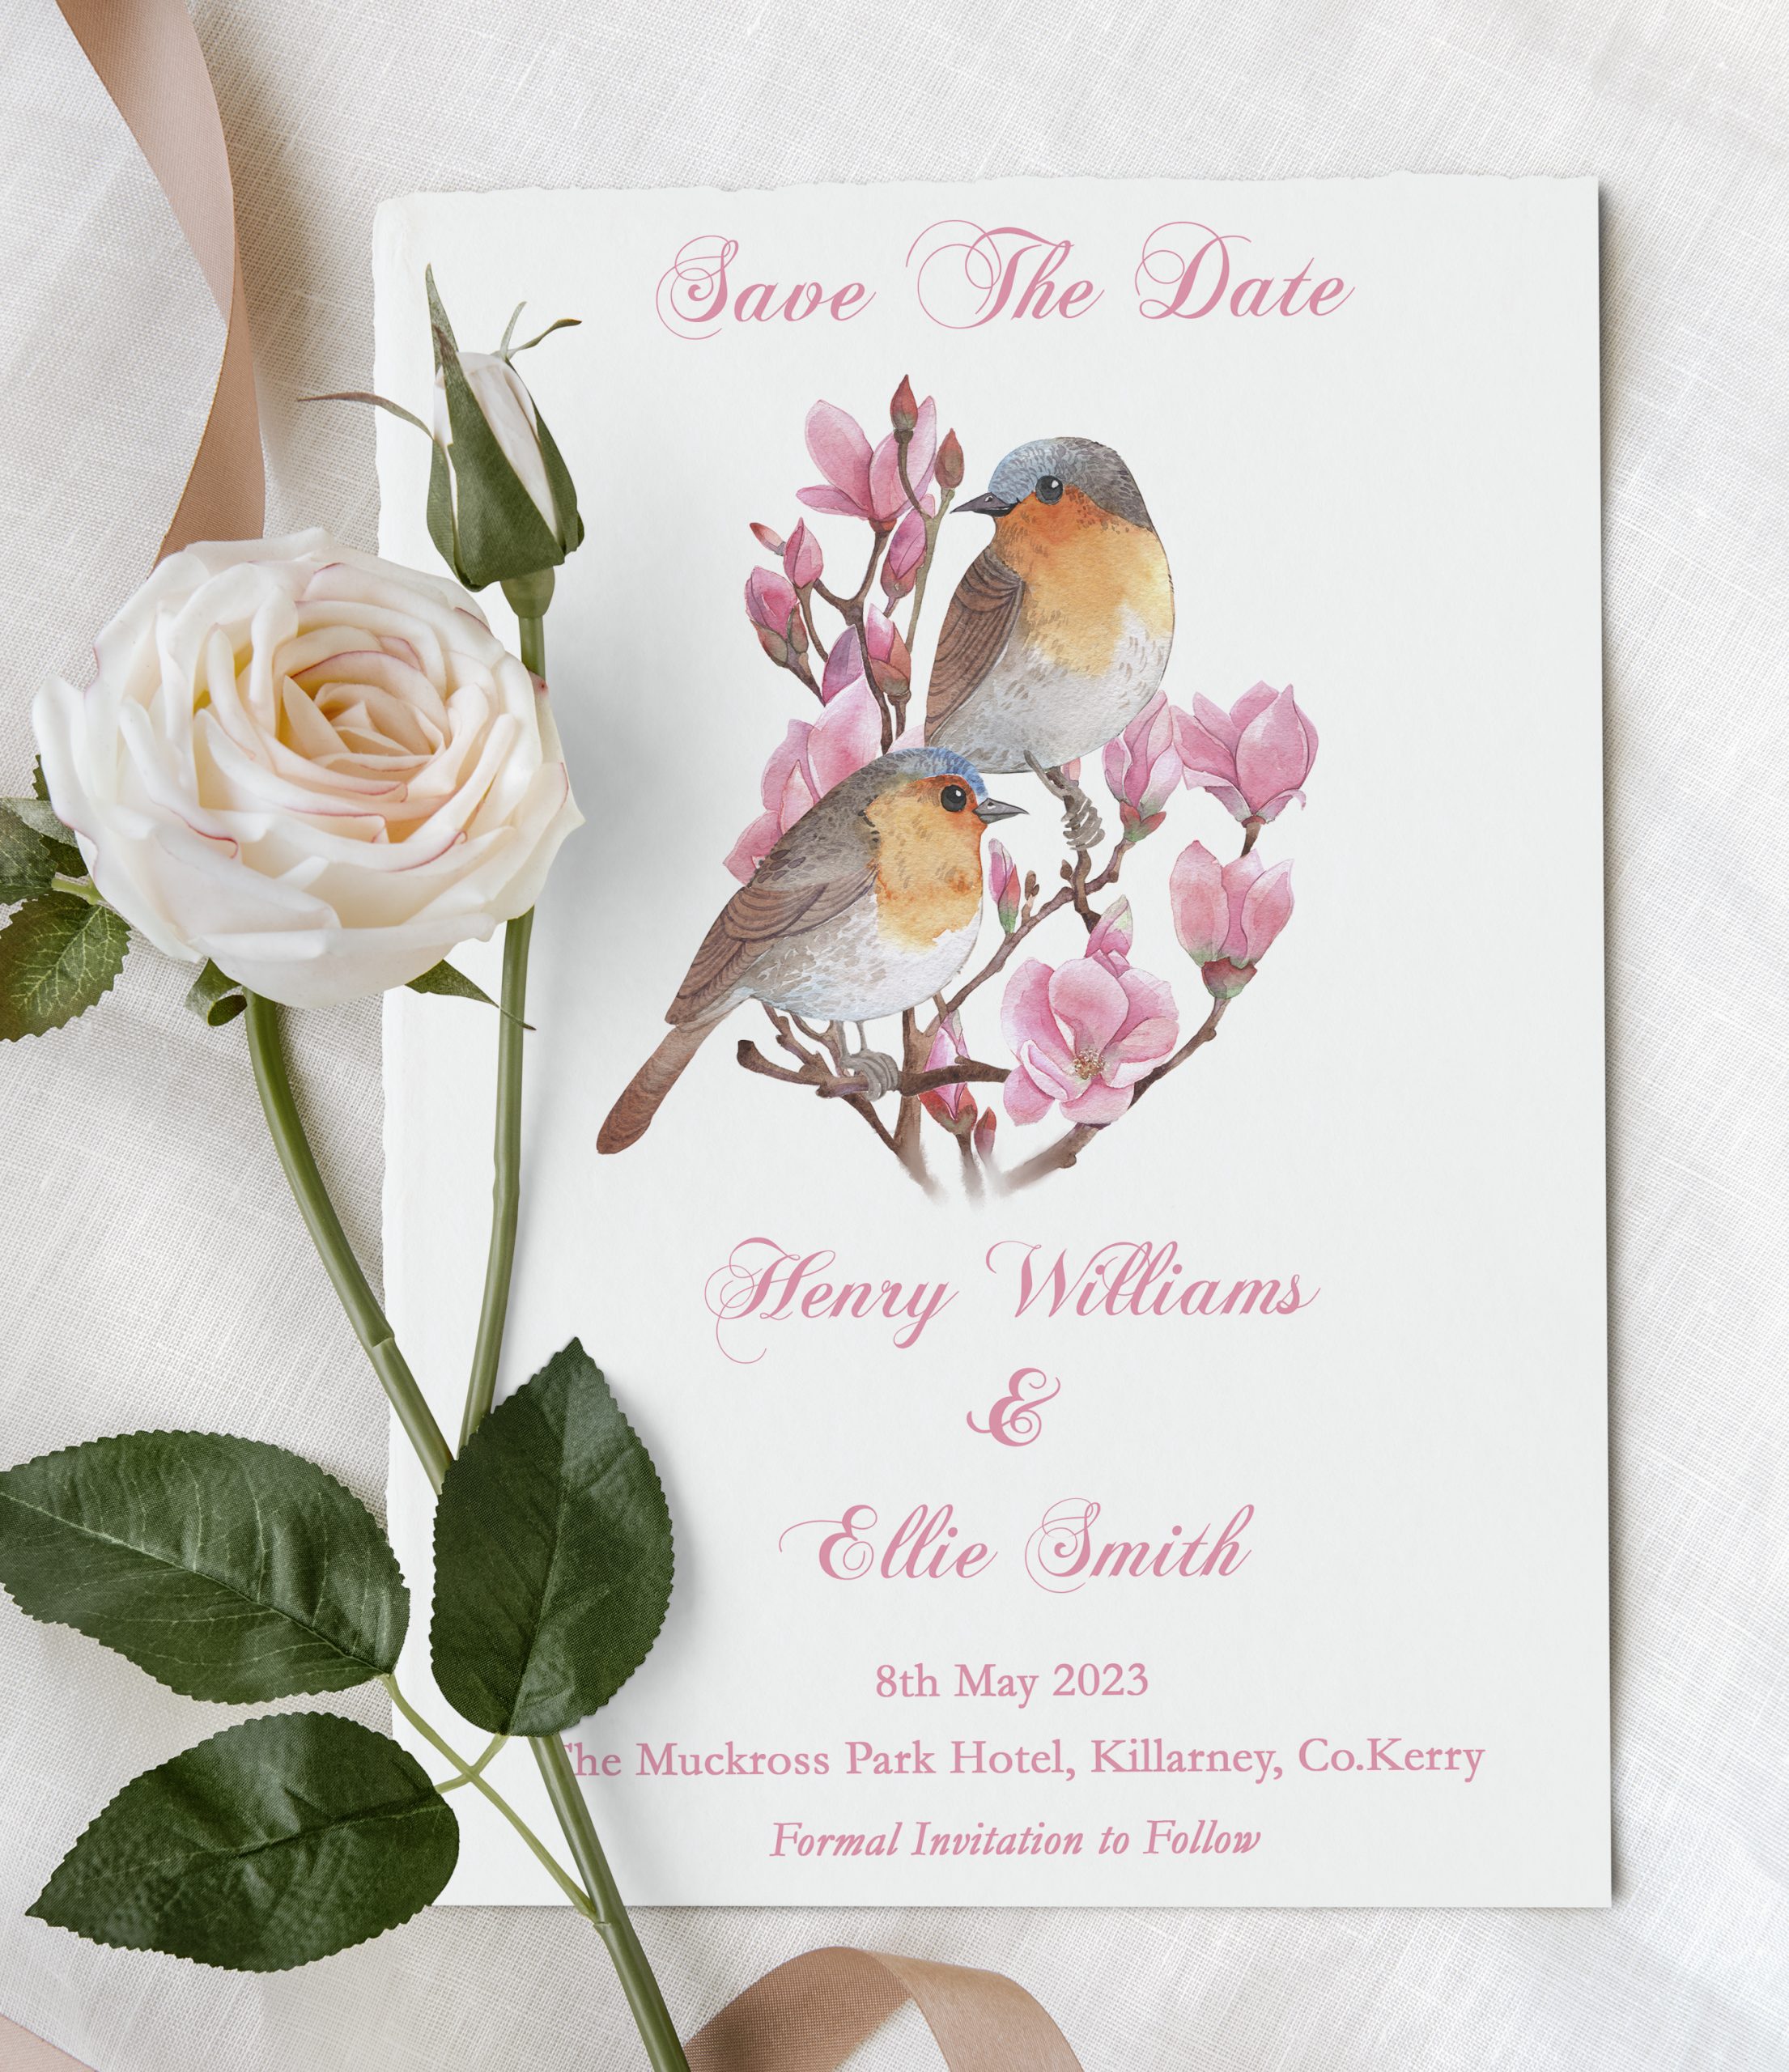 Wedding invitation with rose decoration